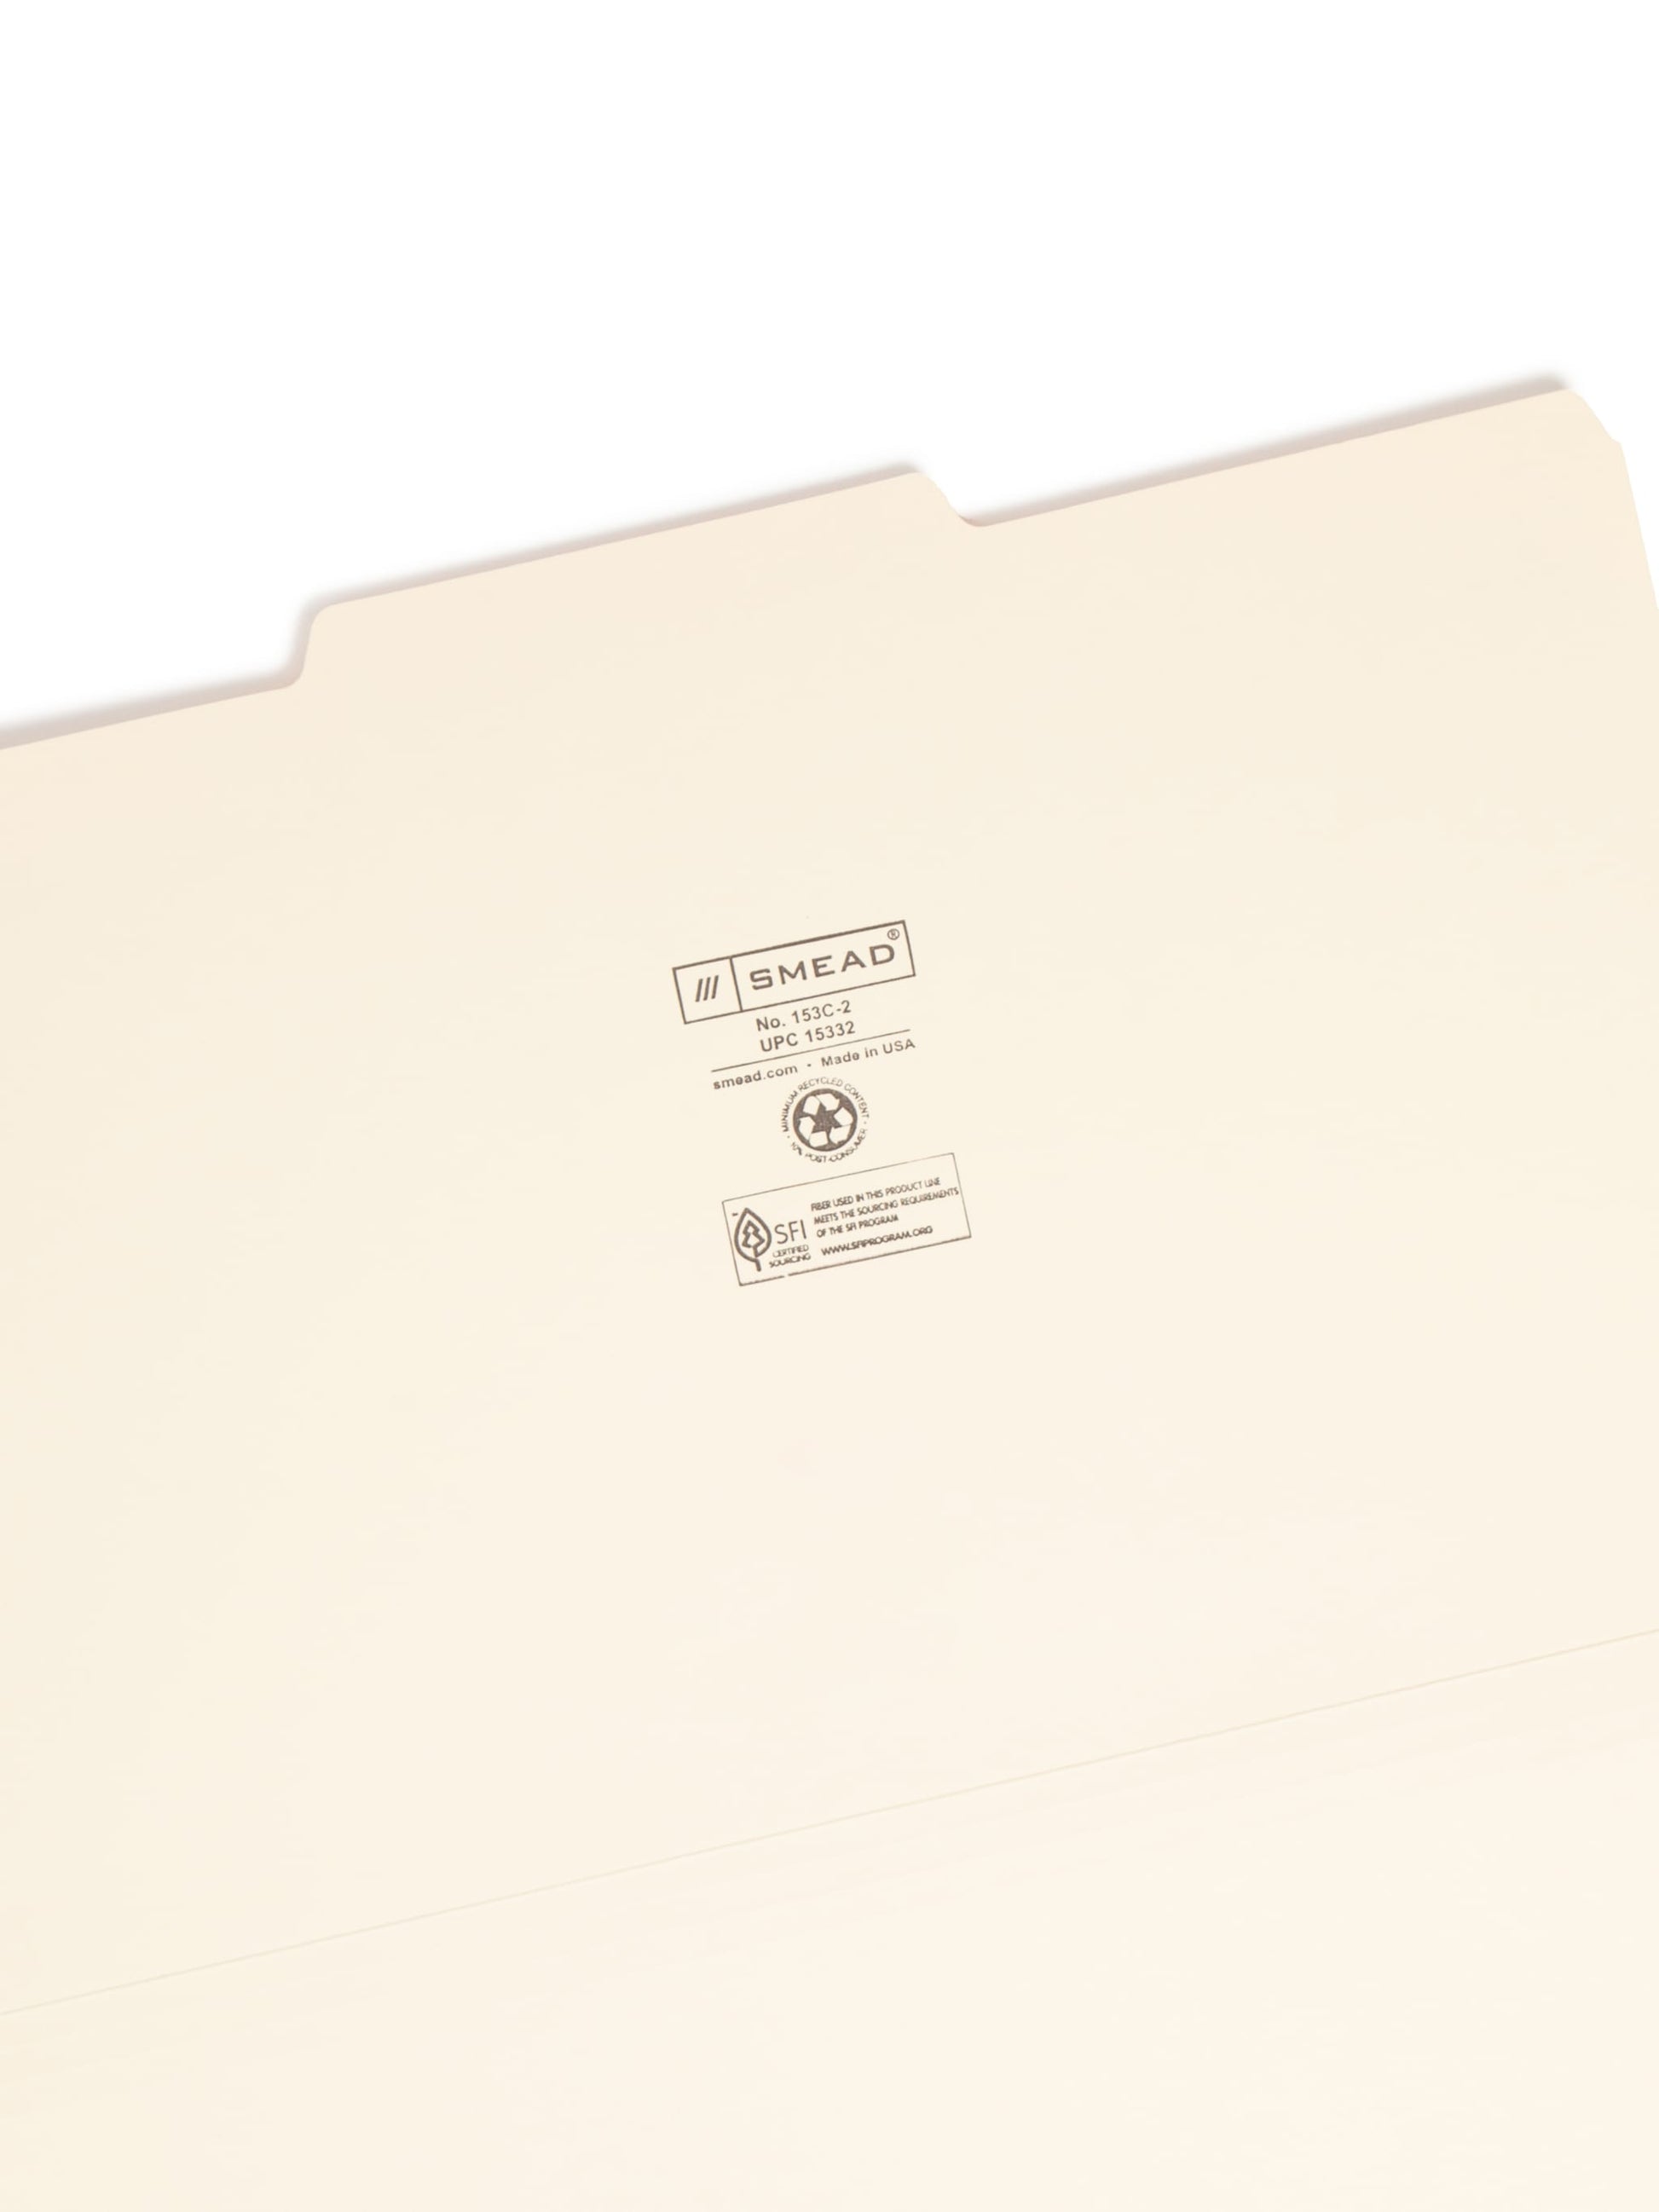 Standard File Folders, 1/3-Cut Center Tab, Manila Color, Legal Size, Set of 100, 086486153324